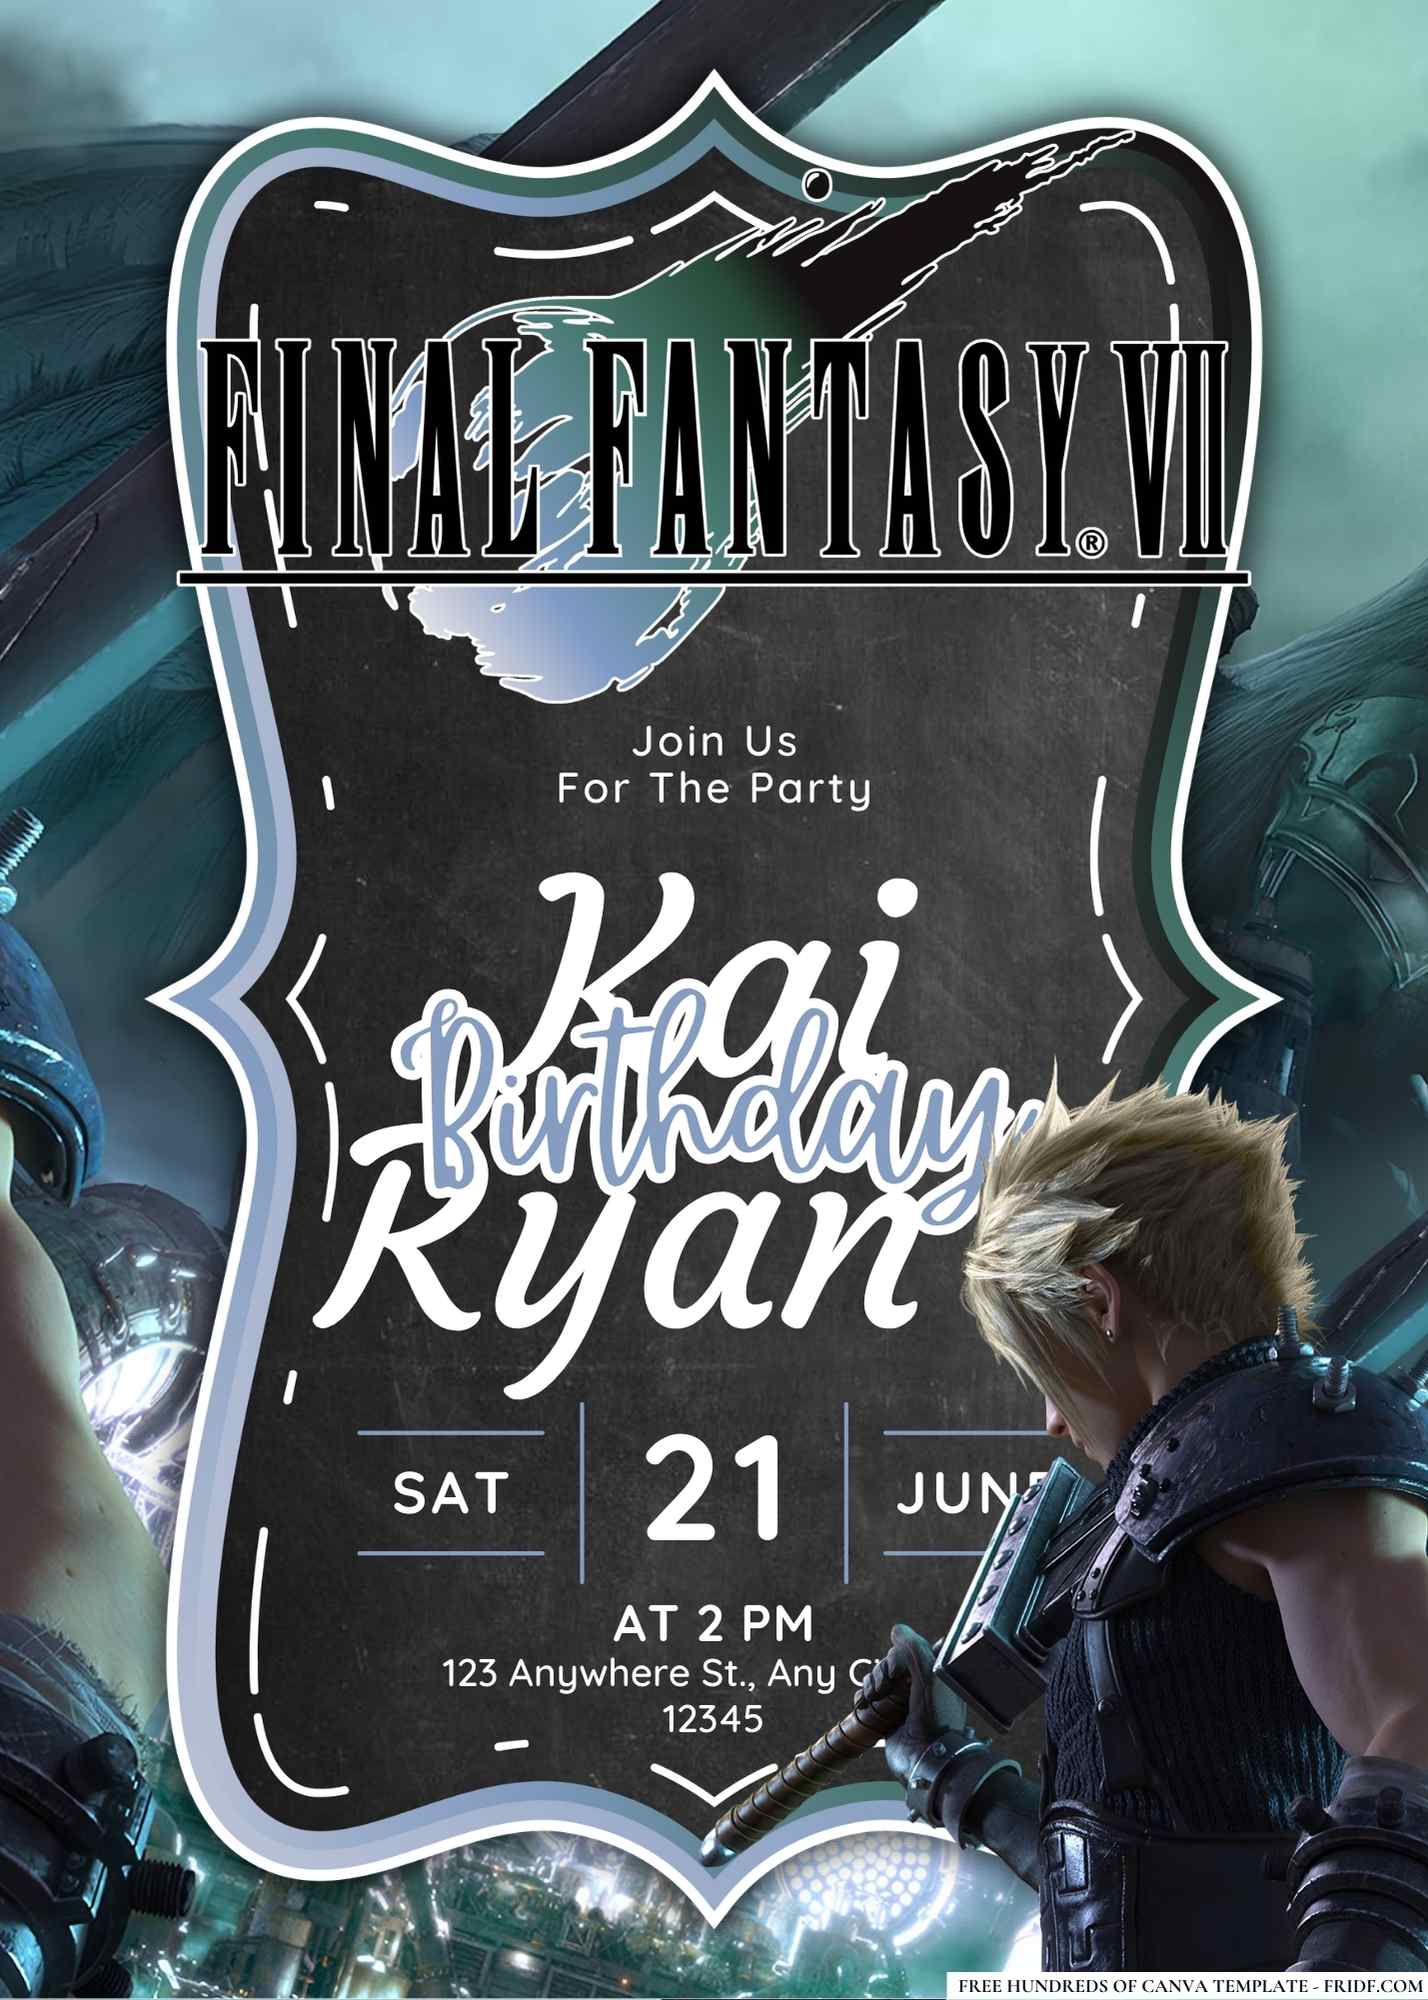 FREE Editable Final Fantasy VII Birthday Invitation